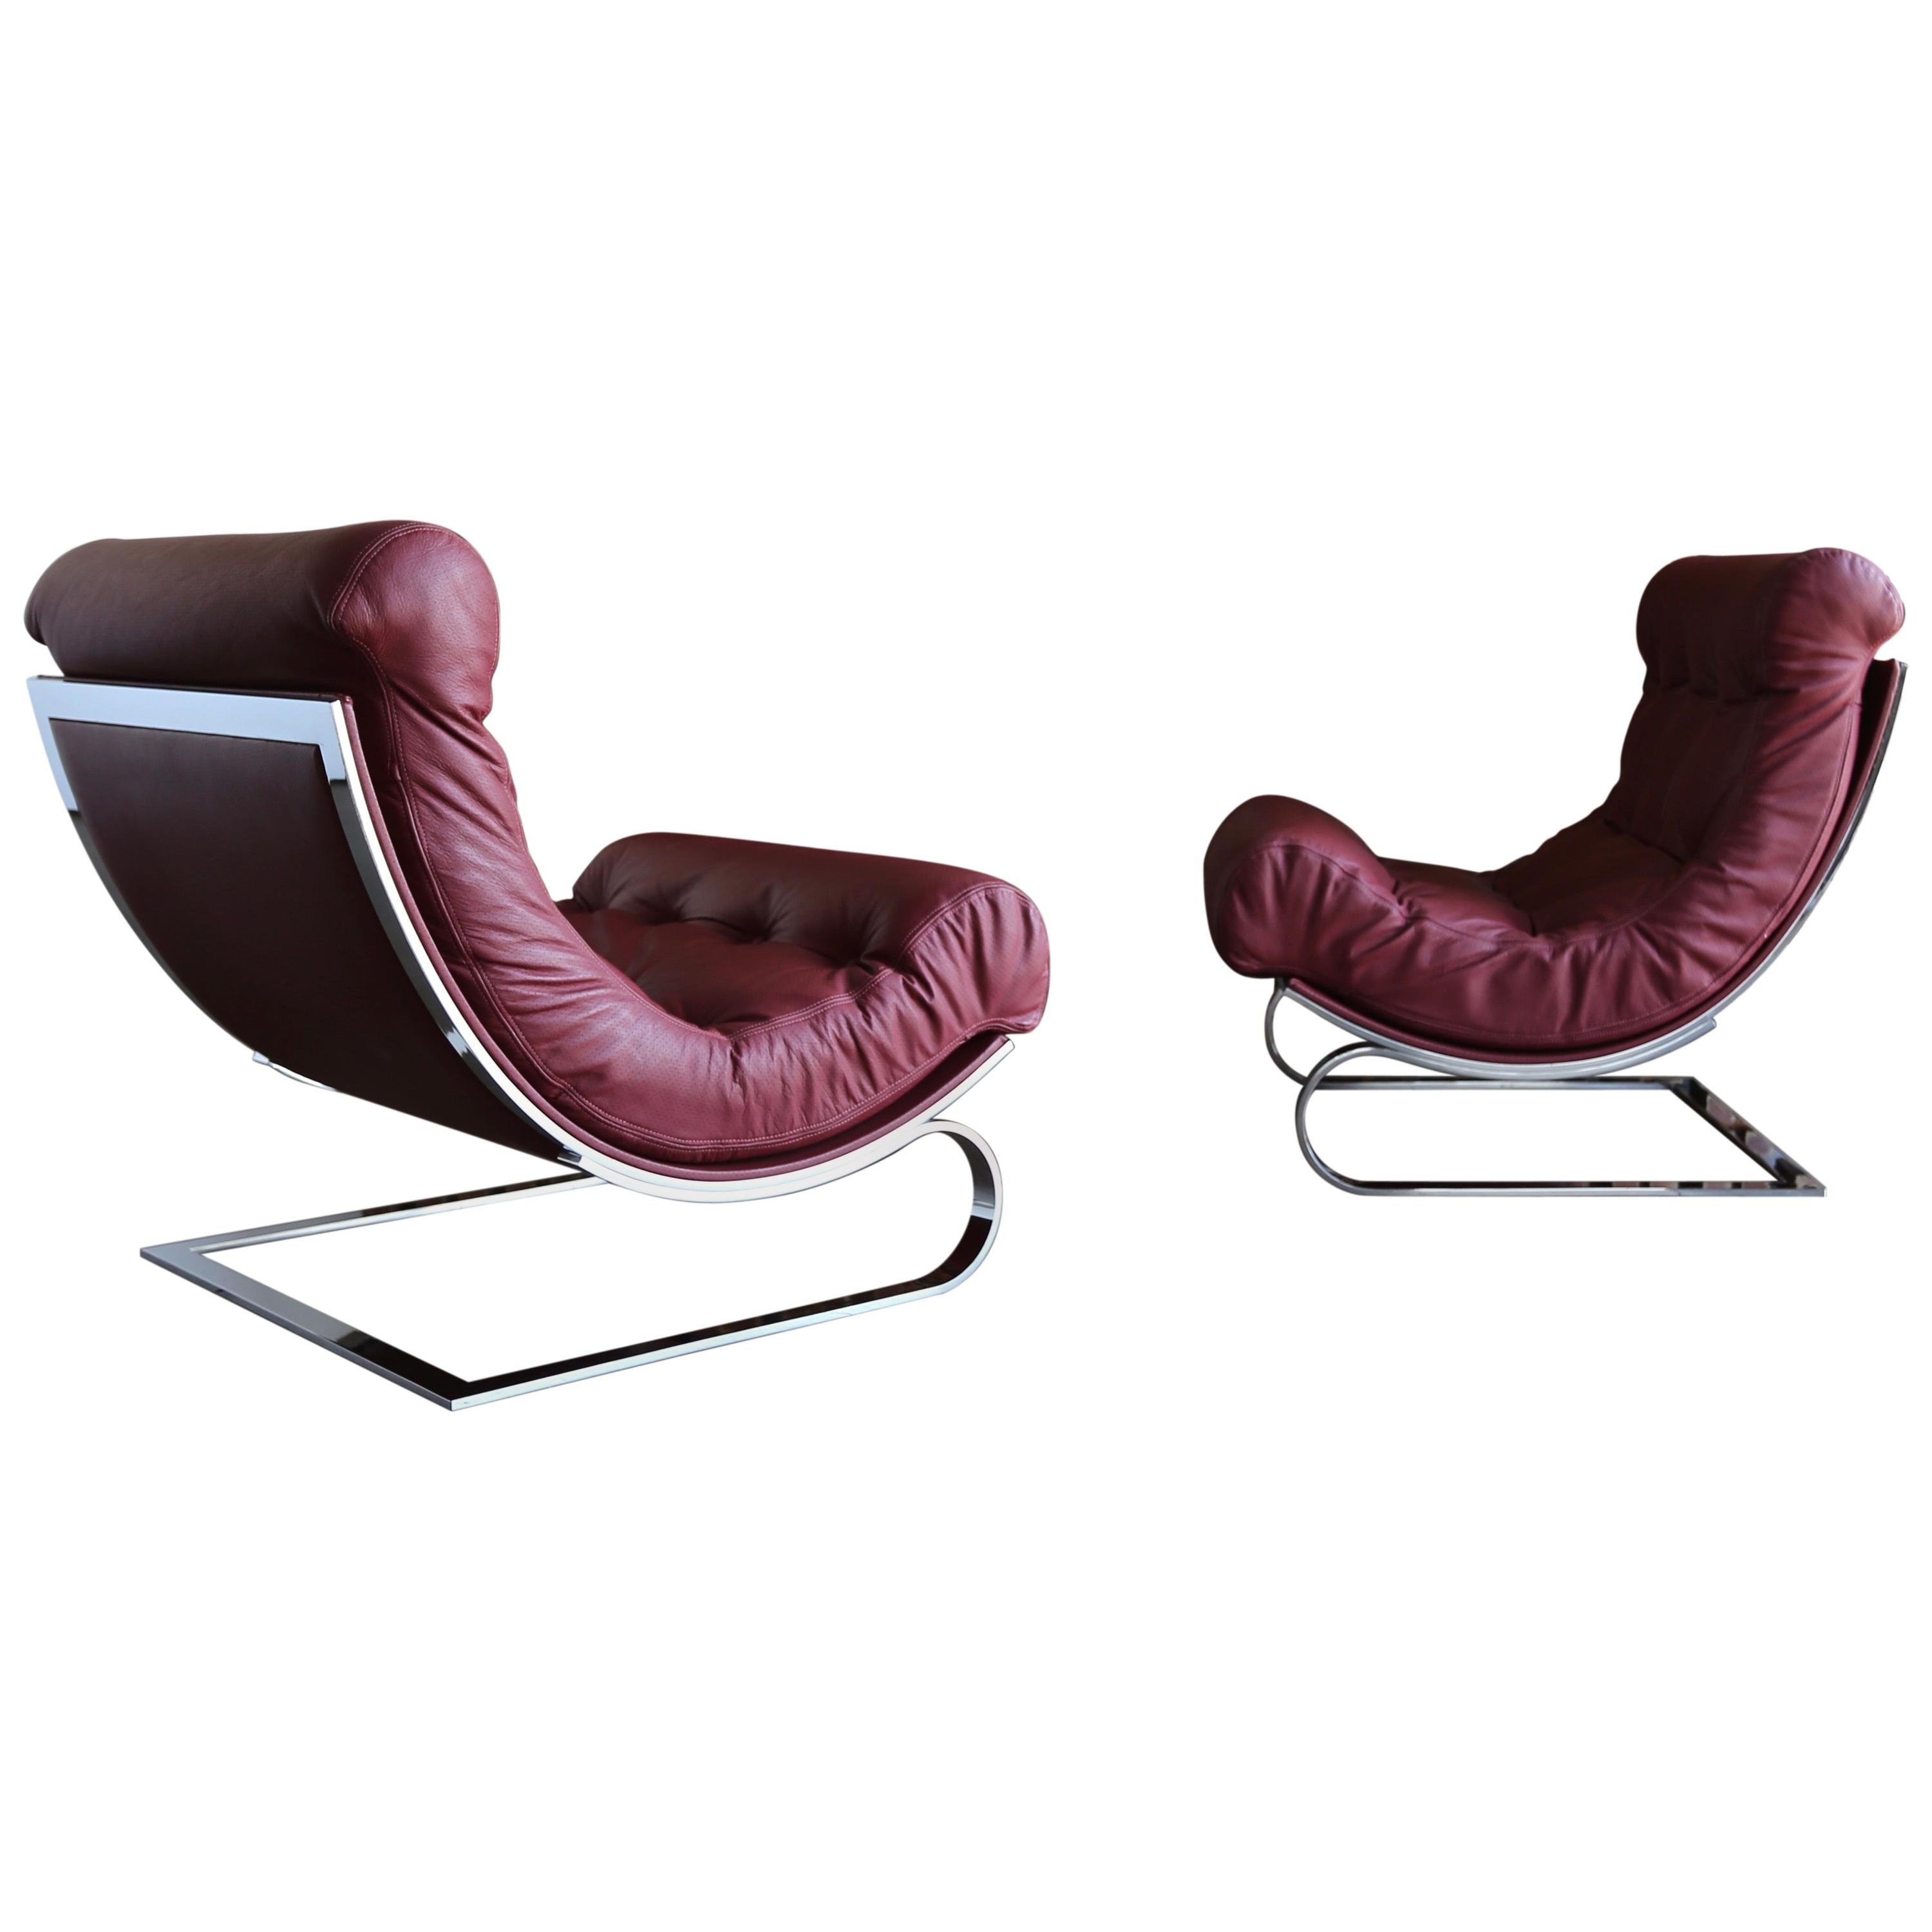 Renato Balestra Leather Lounge Chairs for Cinova Italy, circa 1970